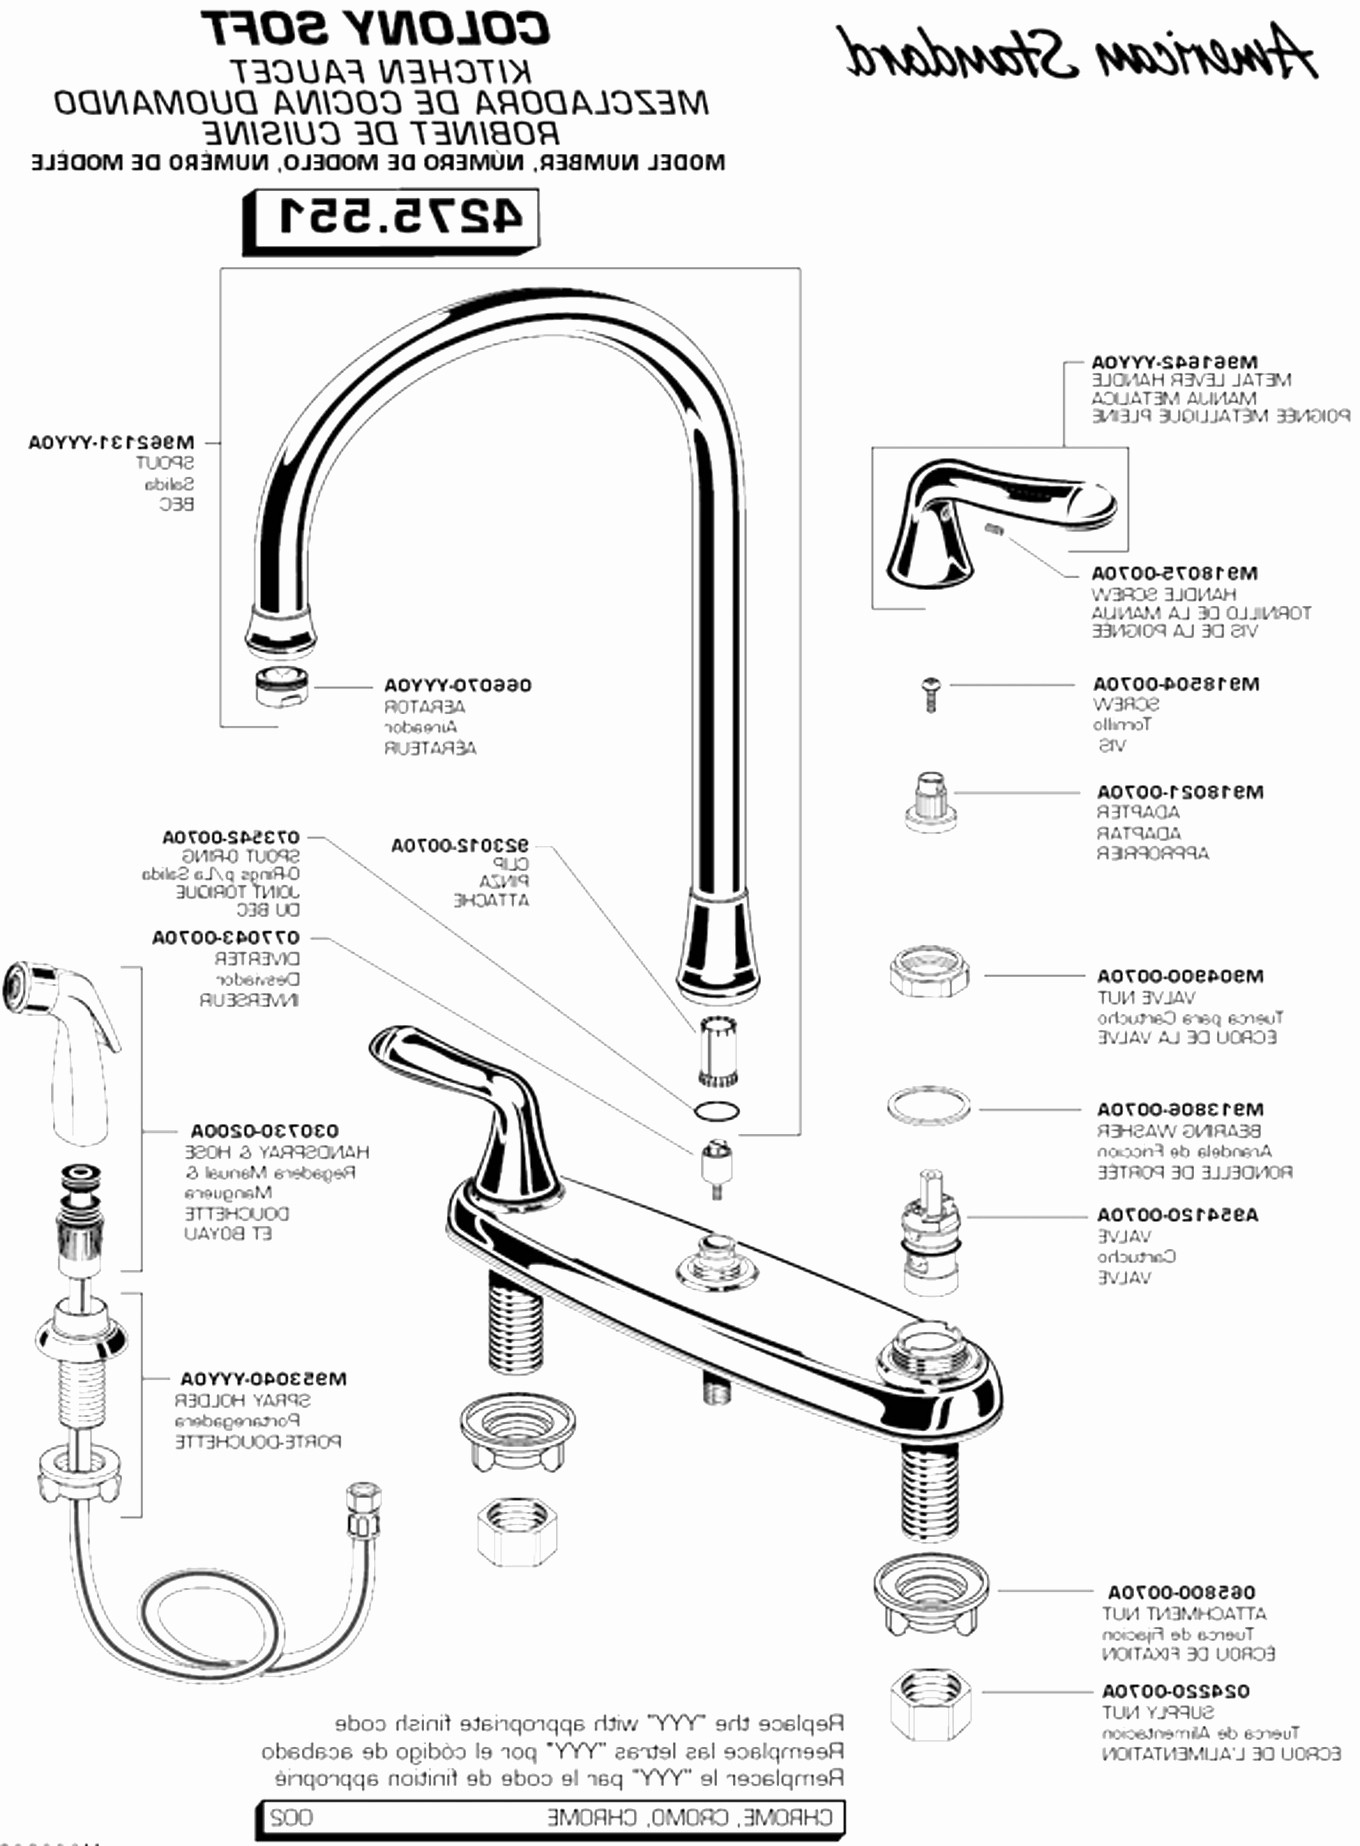 American Standard Faucet Parts Diagram Magnificent American Standard Kitchen Faucet Parts Diagram Of American Standard Faucet Parts Diagram